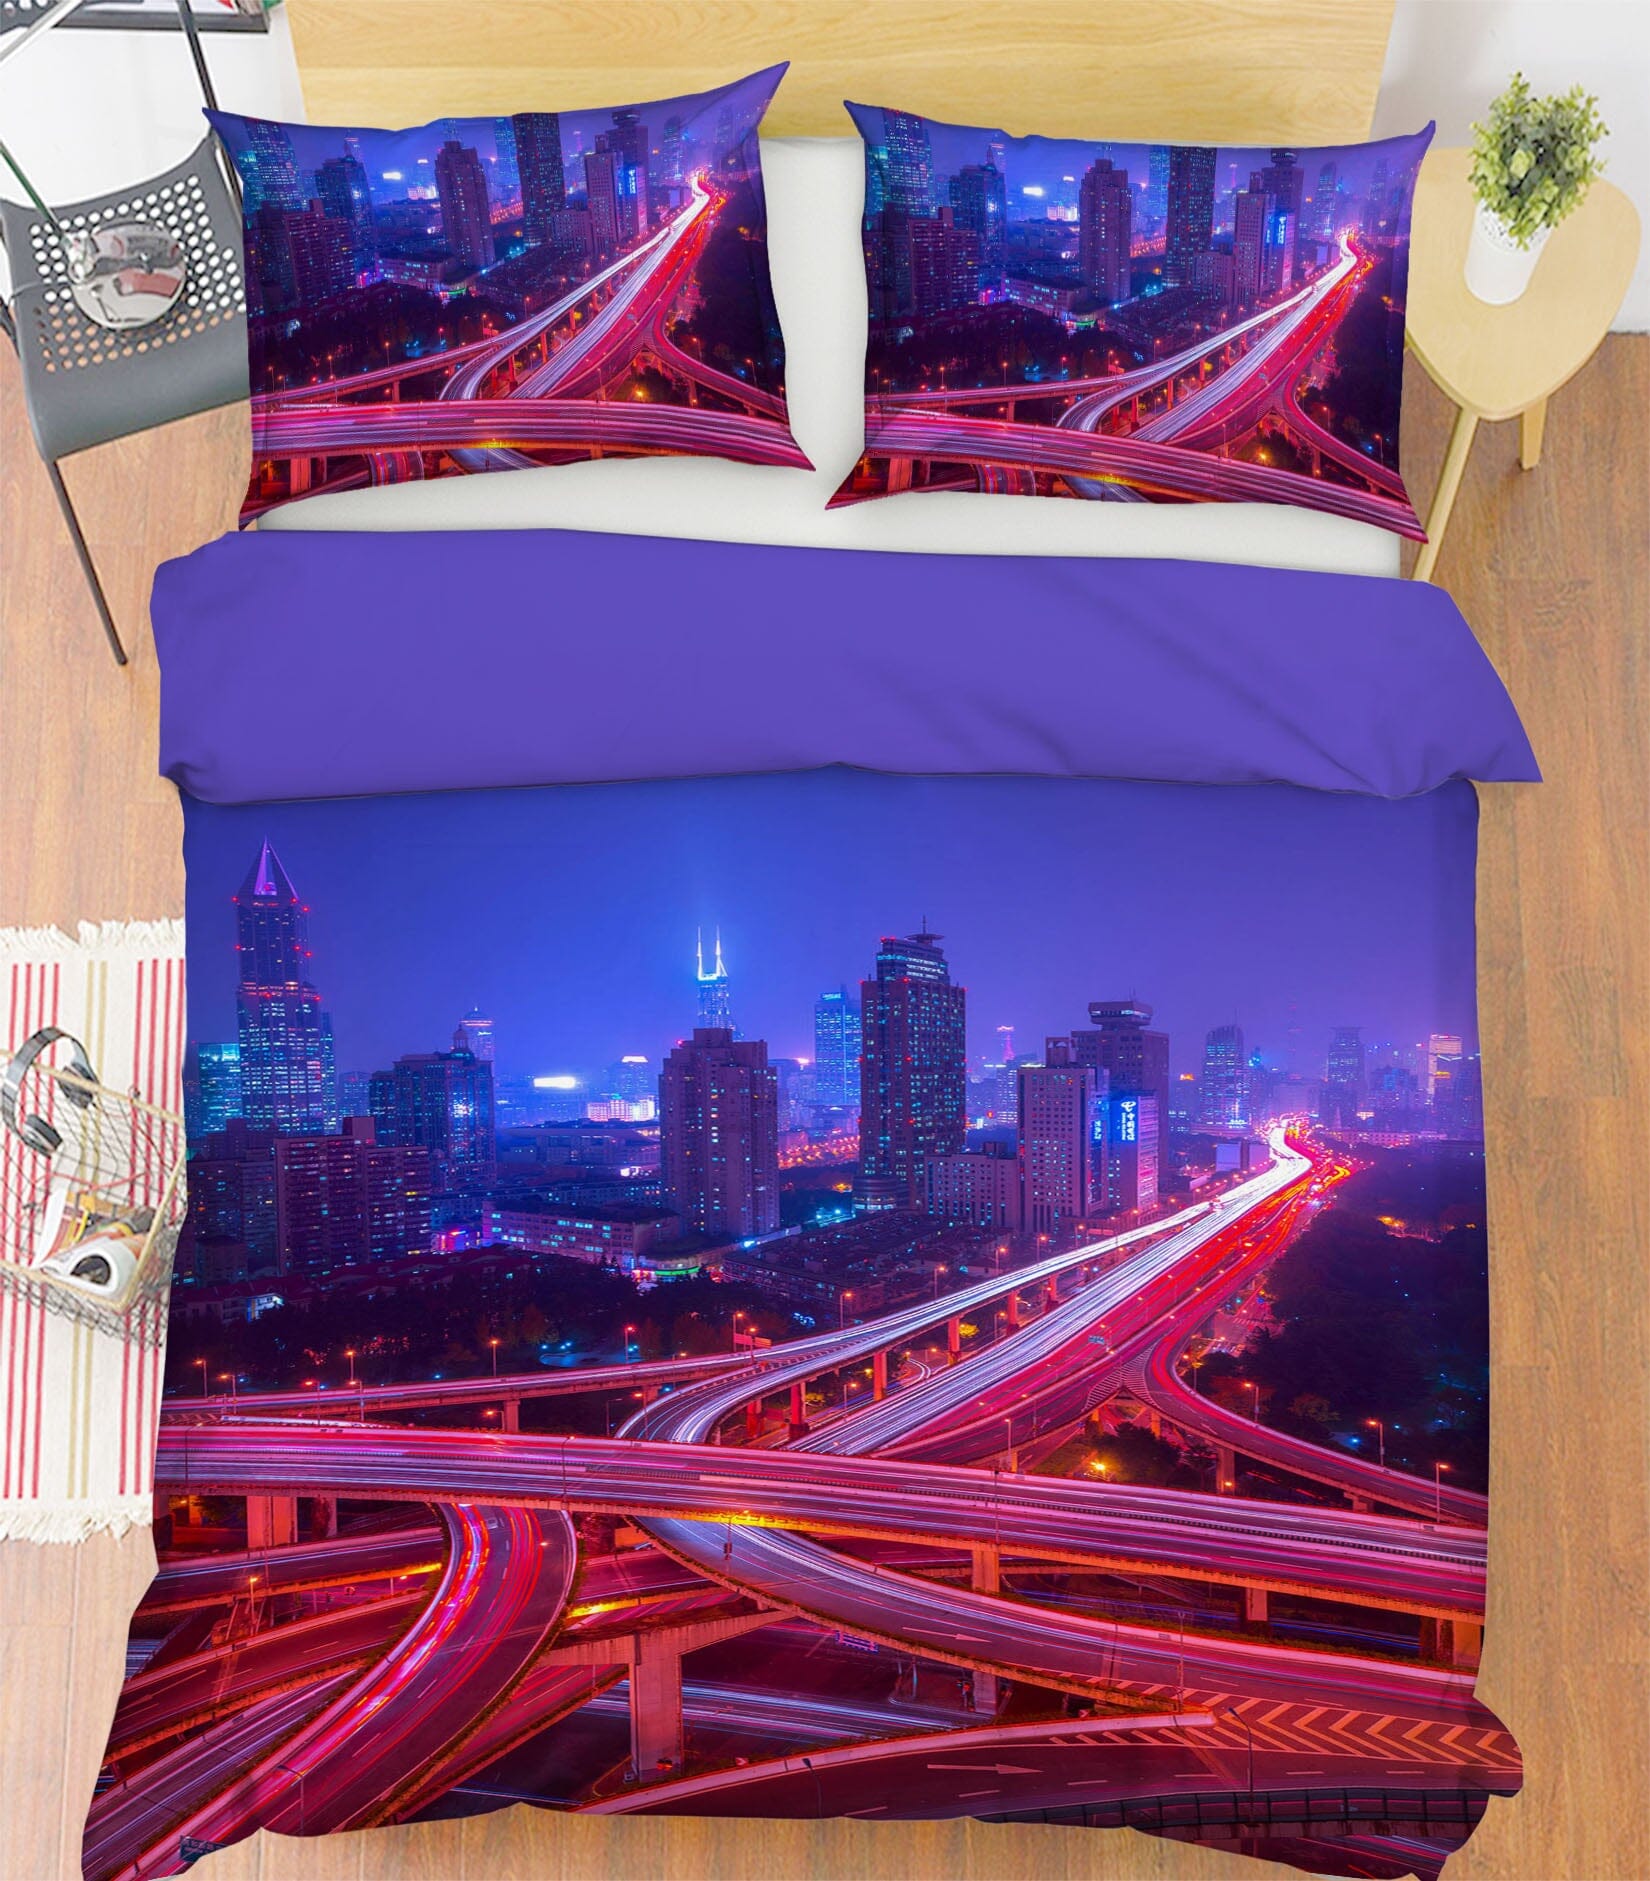 3D Transportation Hub 2130 Marco Carmassi Bedding Bed Pillowcases Quilt Quiet Covers AJ Creativity Home 